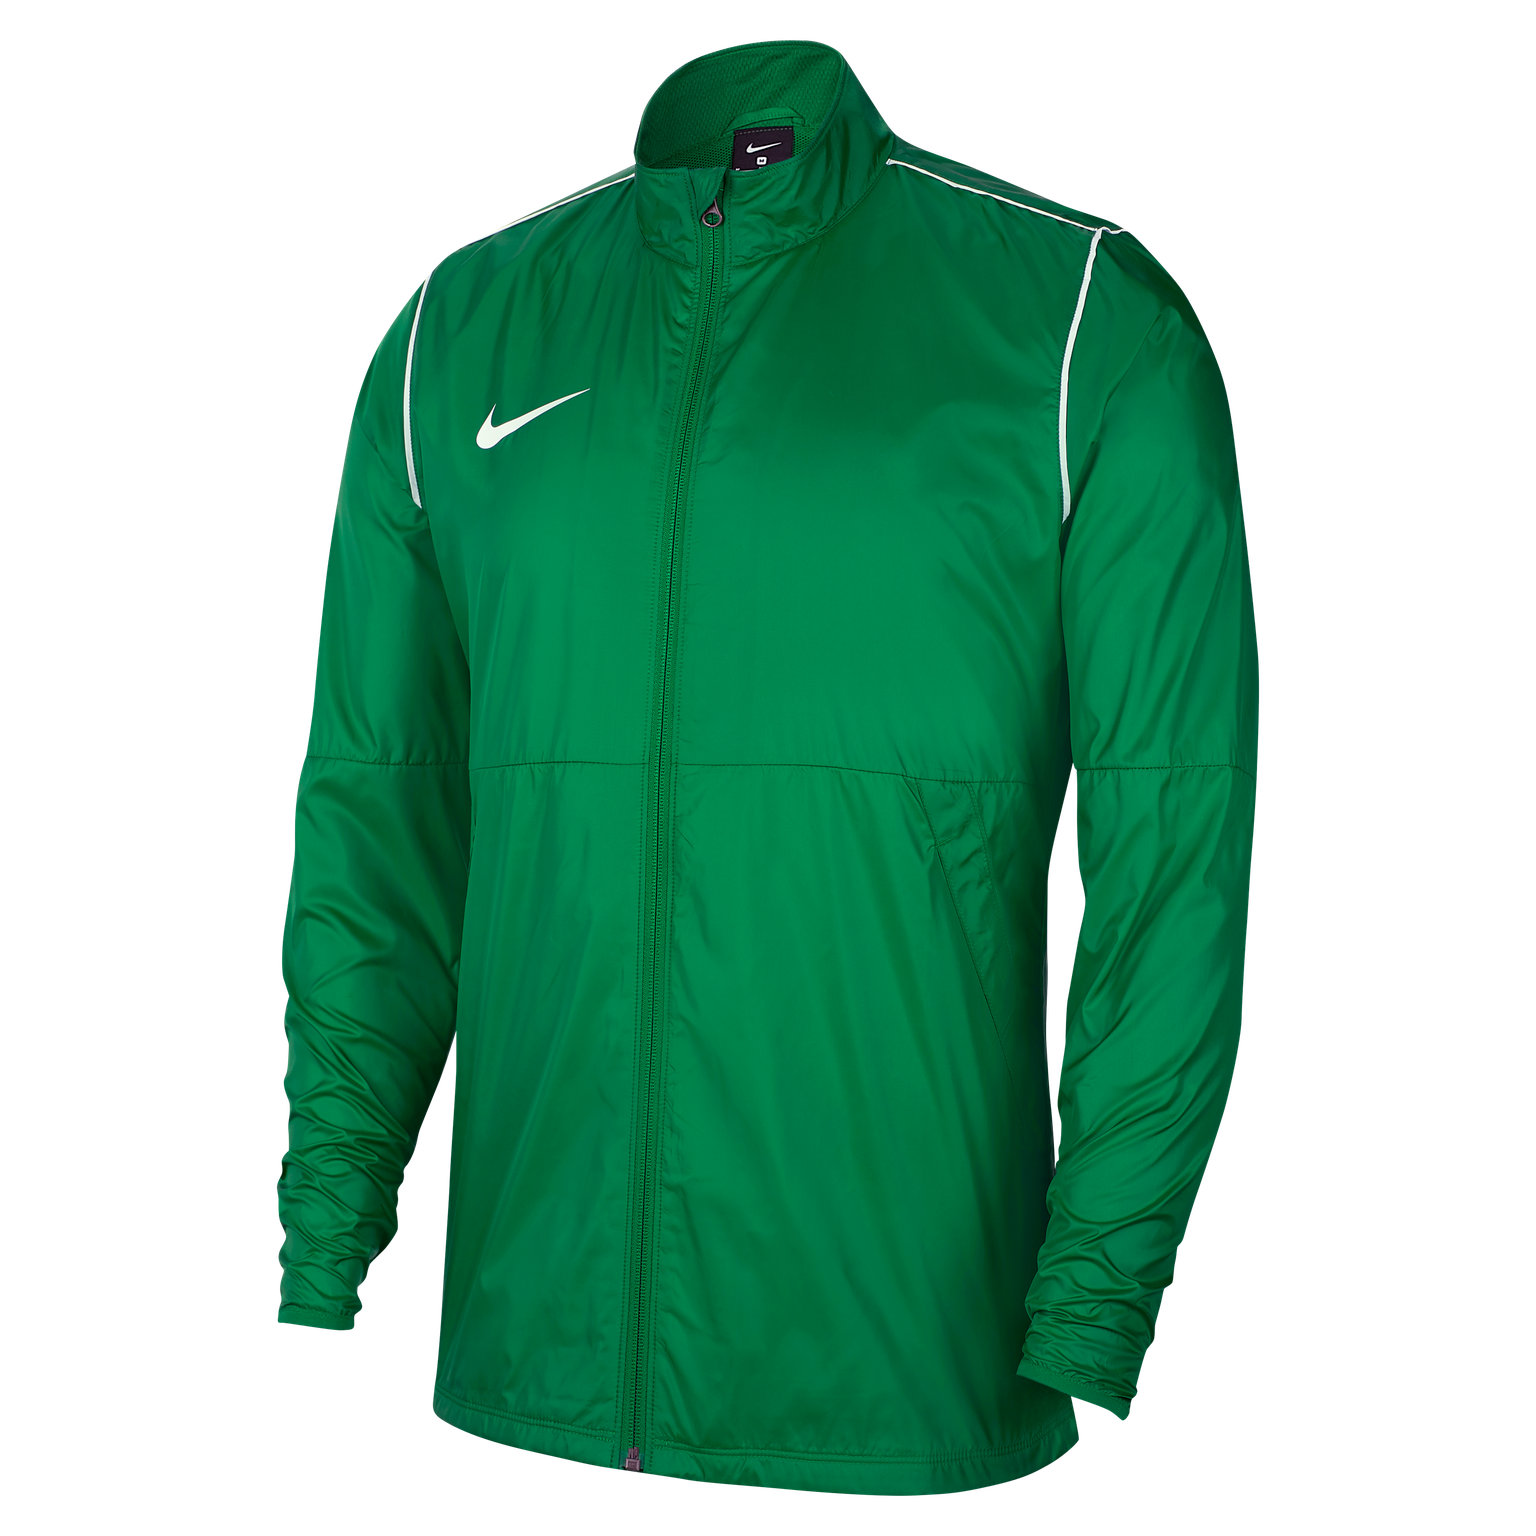 Nike Park 20 Repel Rain Jacket in Pine Green/White/White